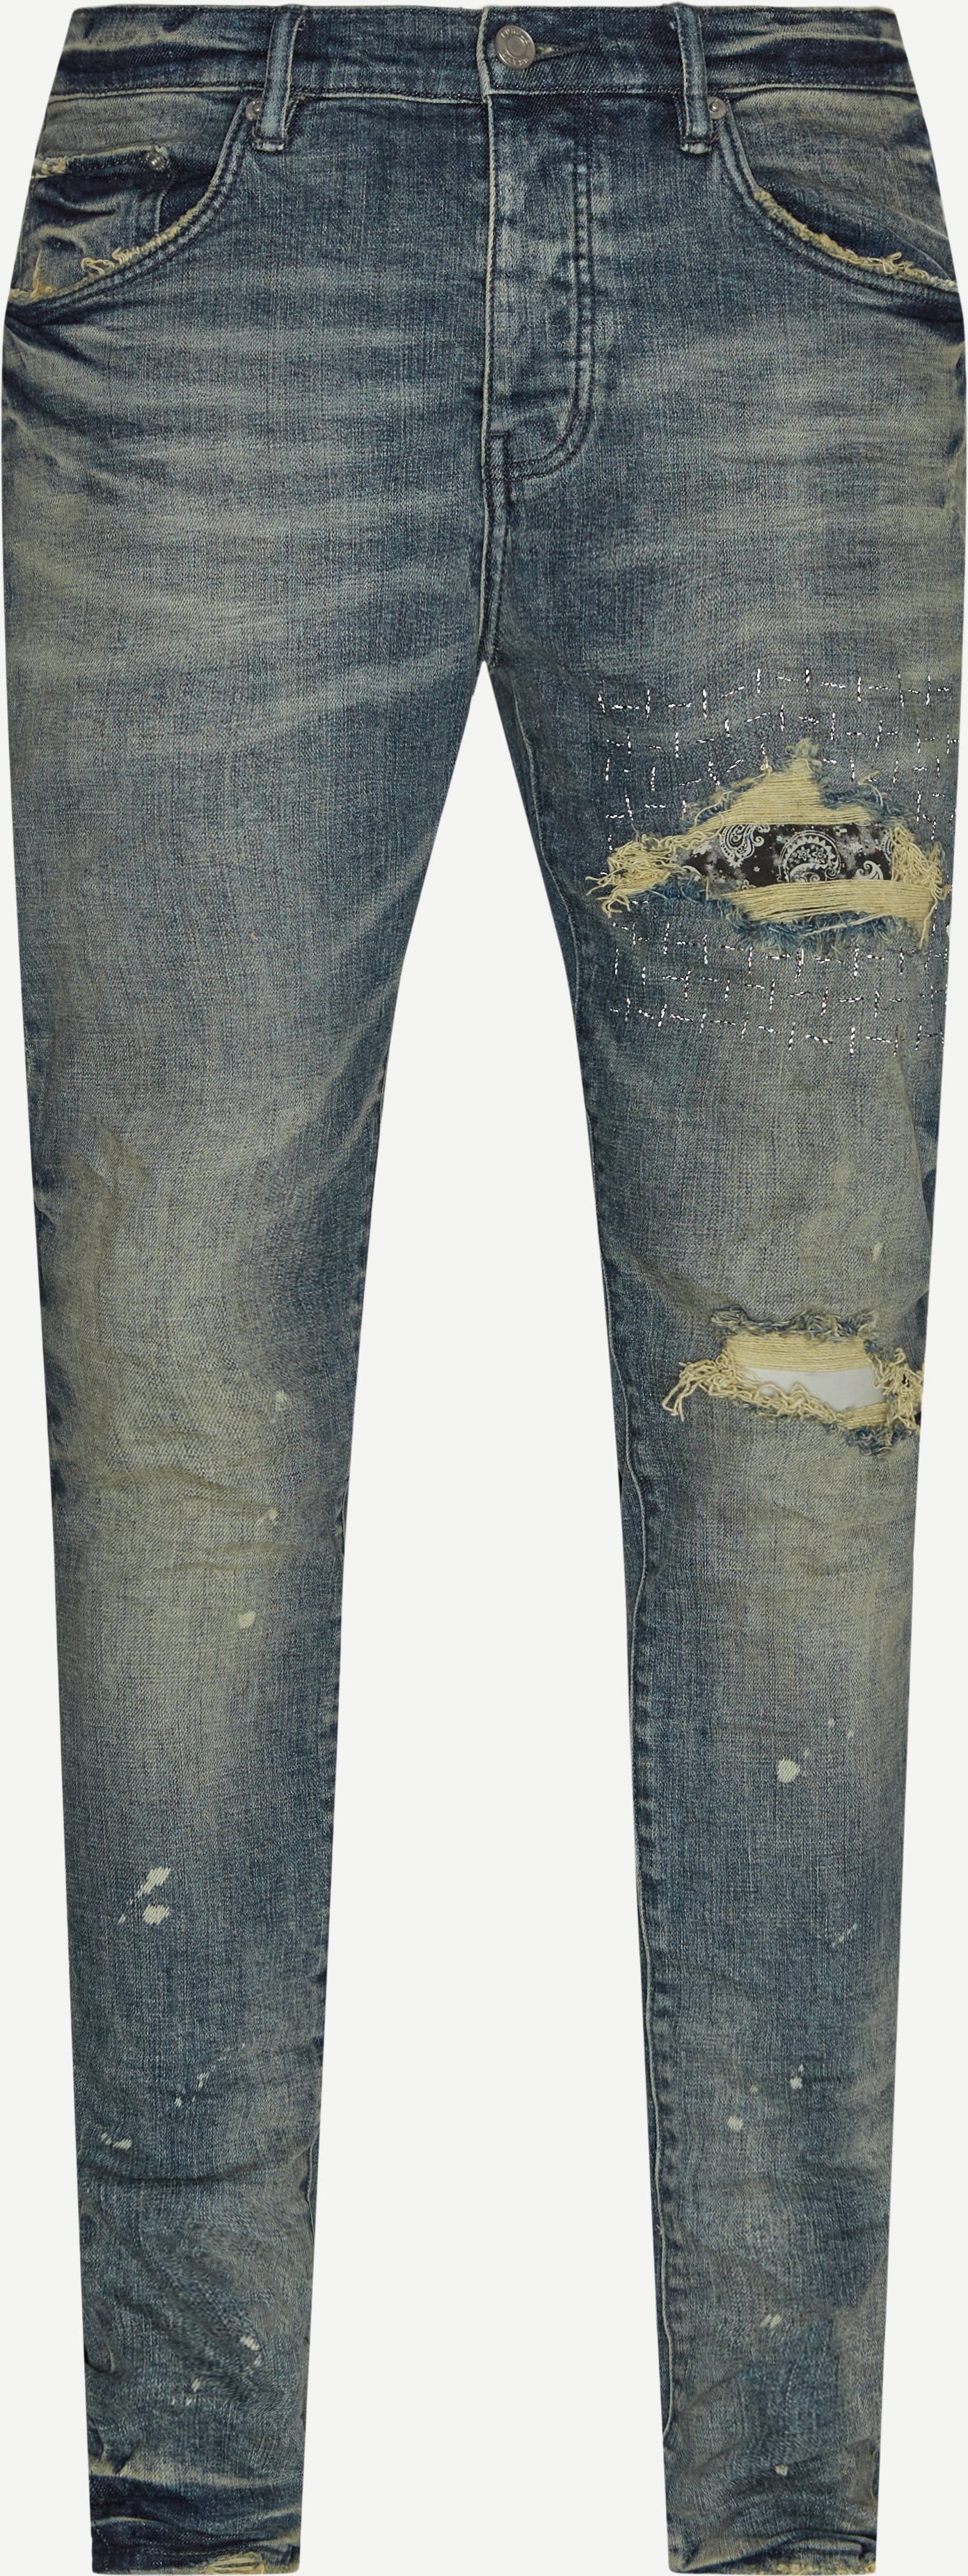 Nya printade jeans med bandana patch - Jeans - Slim fit - Denim